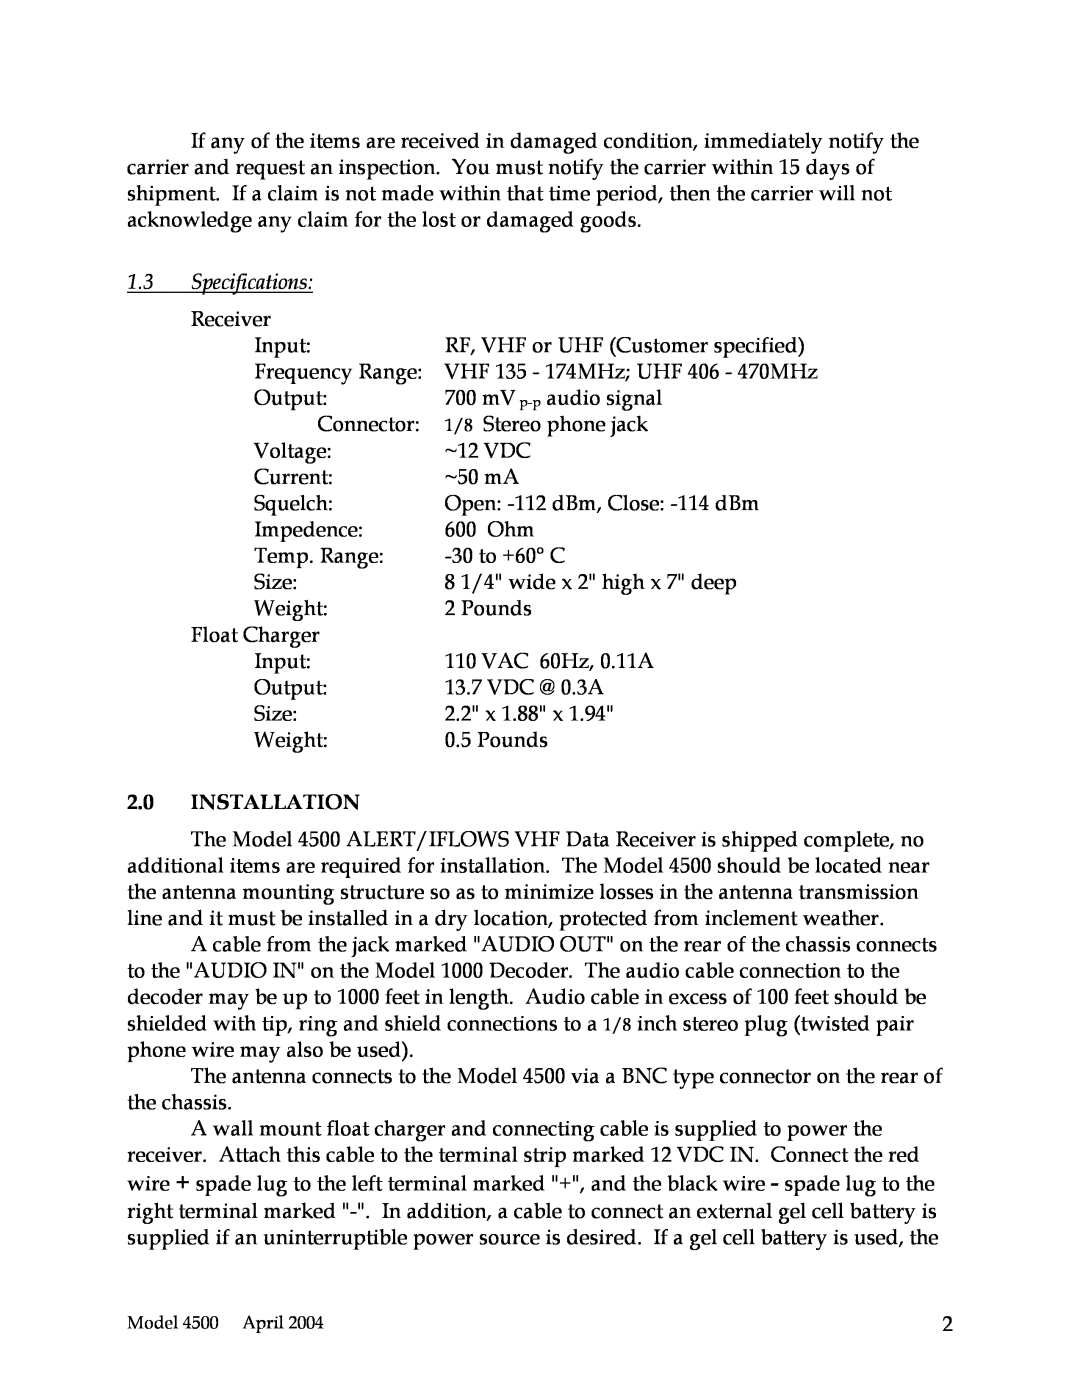 High Sierra 4500, Alert/IFlows VHF Data Receiver instruction manual Specifications, 2.0INSTALLATION 